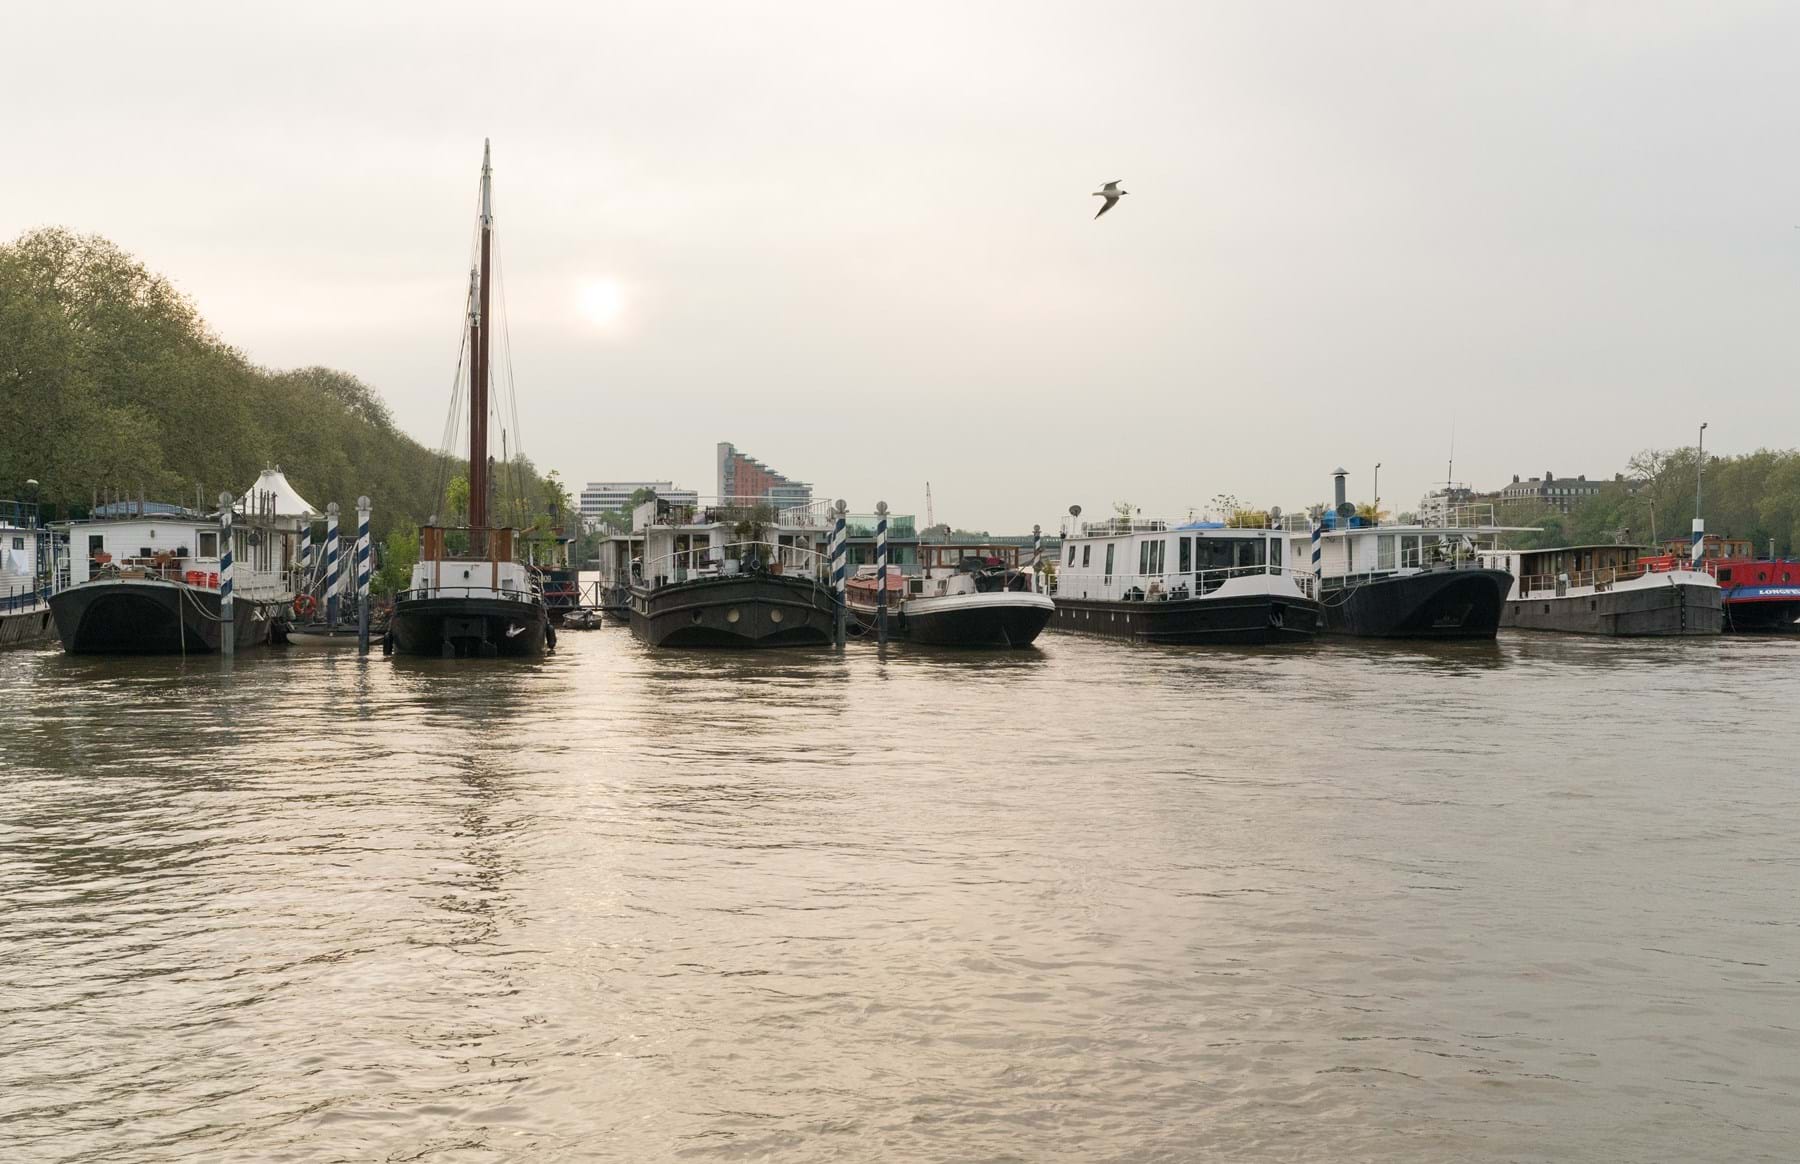 Wandsworth Riverside Quarter Pier - Uber Boat by Thames Clippers